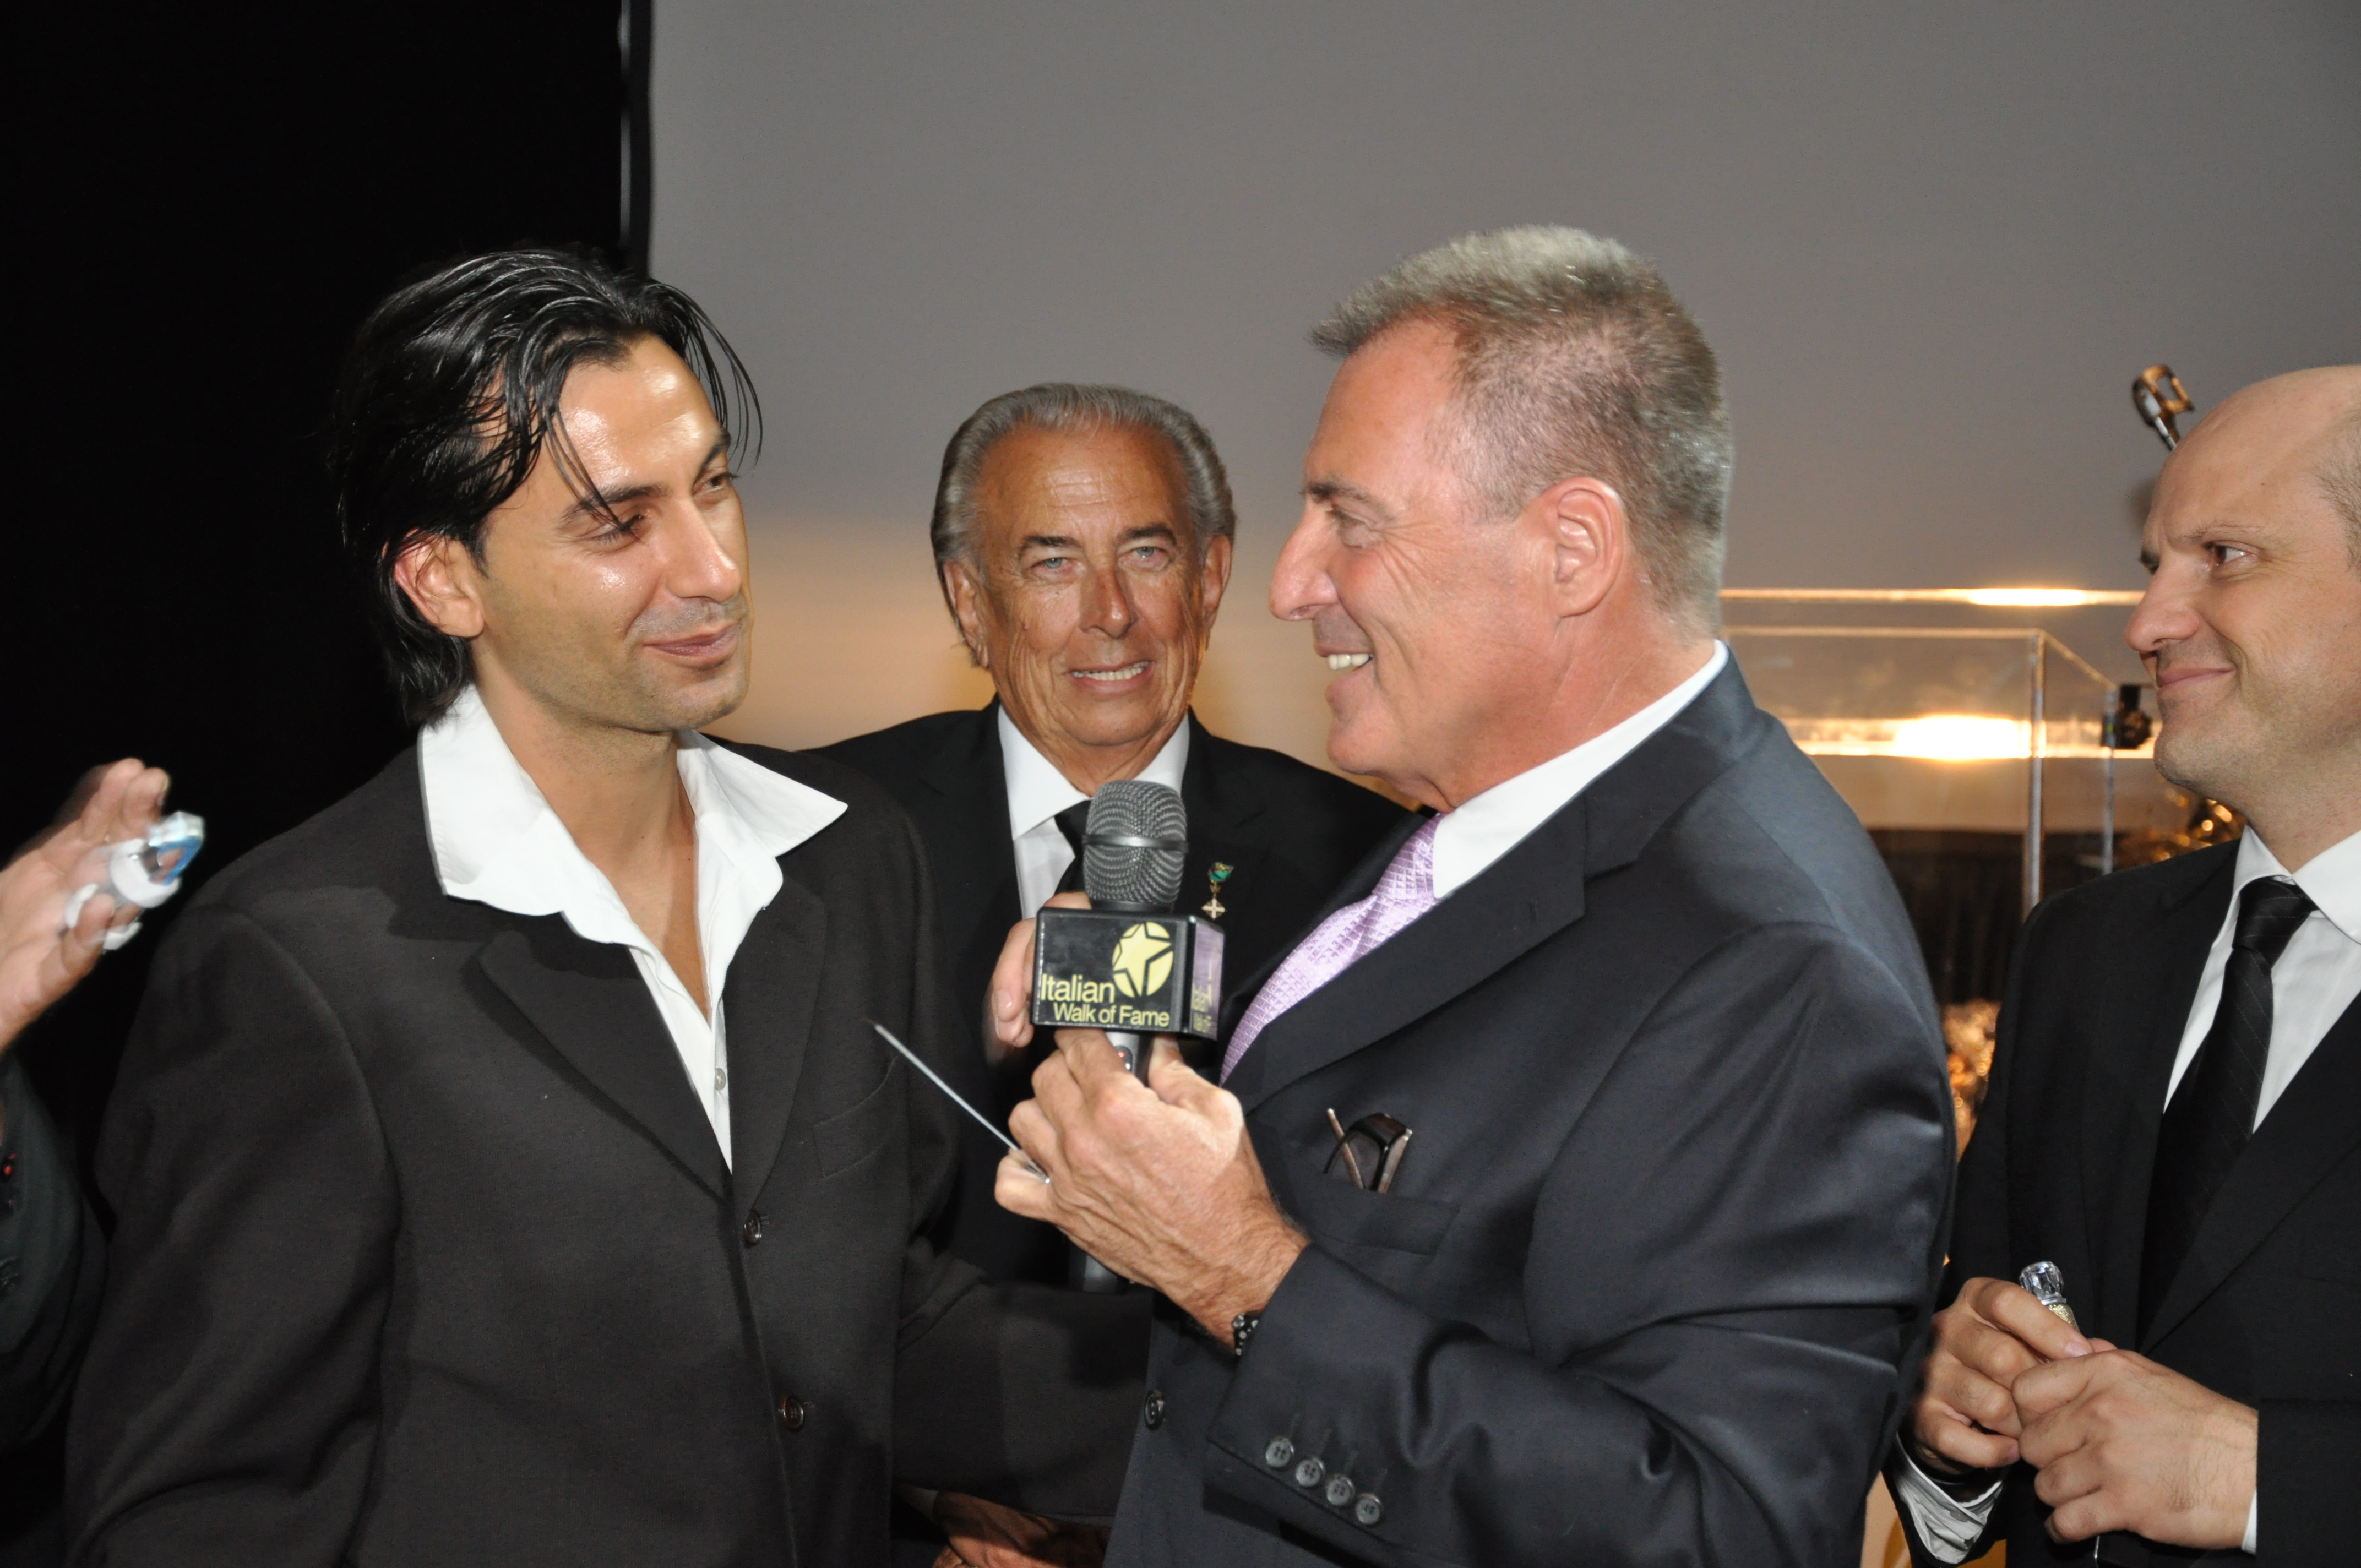 Walk Of Fame with Armand Assante, Frank Mancuso and Enrico Colantoni